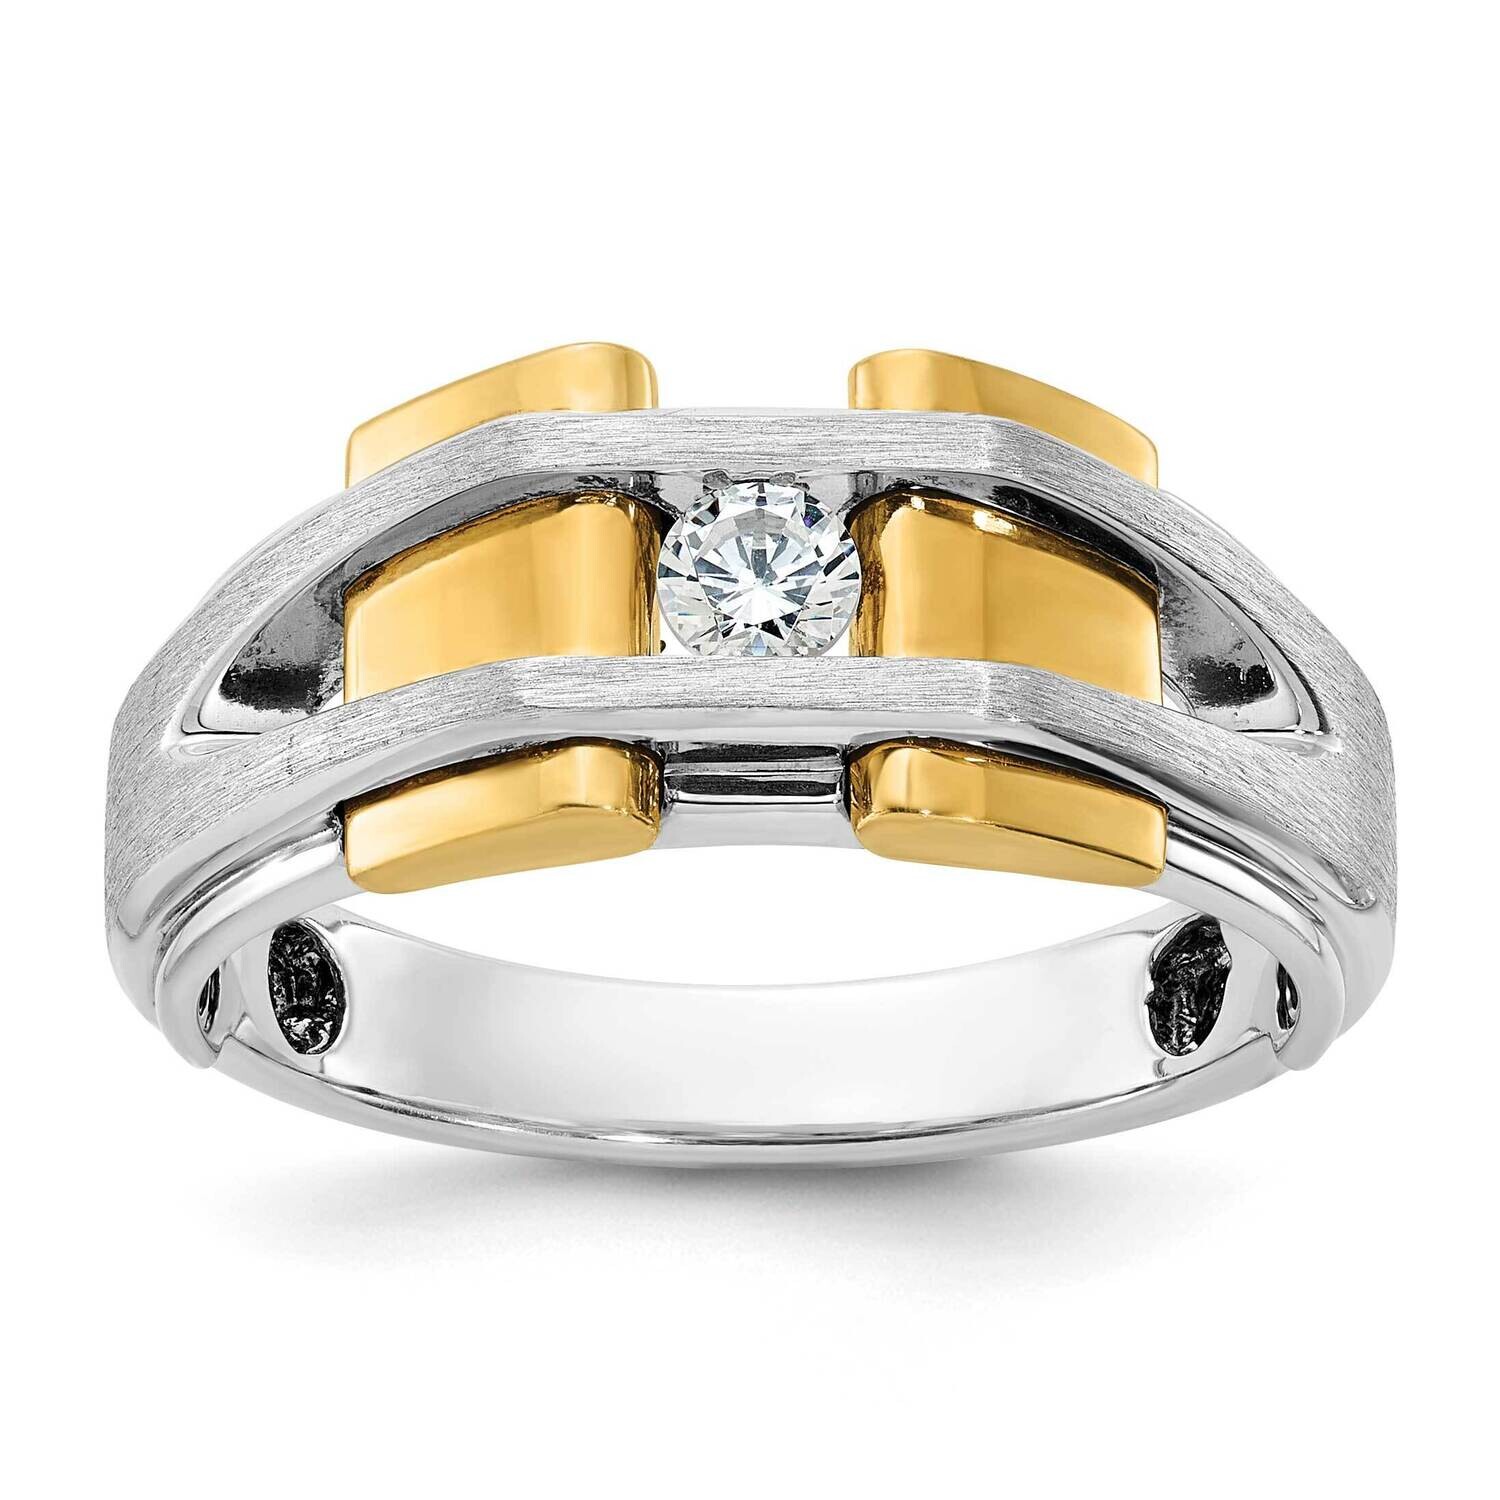 Ibgoodman Men's Polished Satin Diamond Ring Mounting 14k Two-Tone Gold B63726-4WY